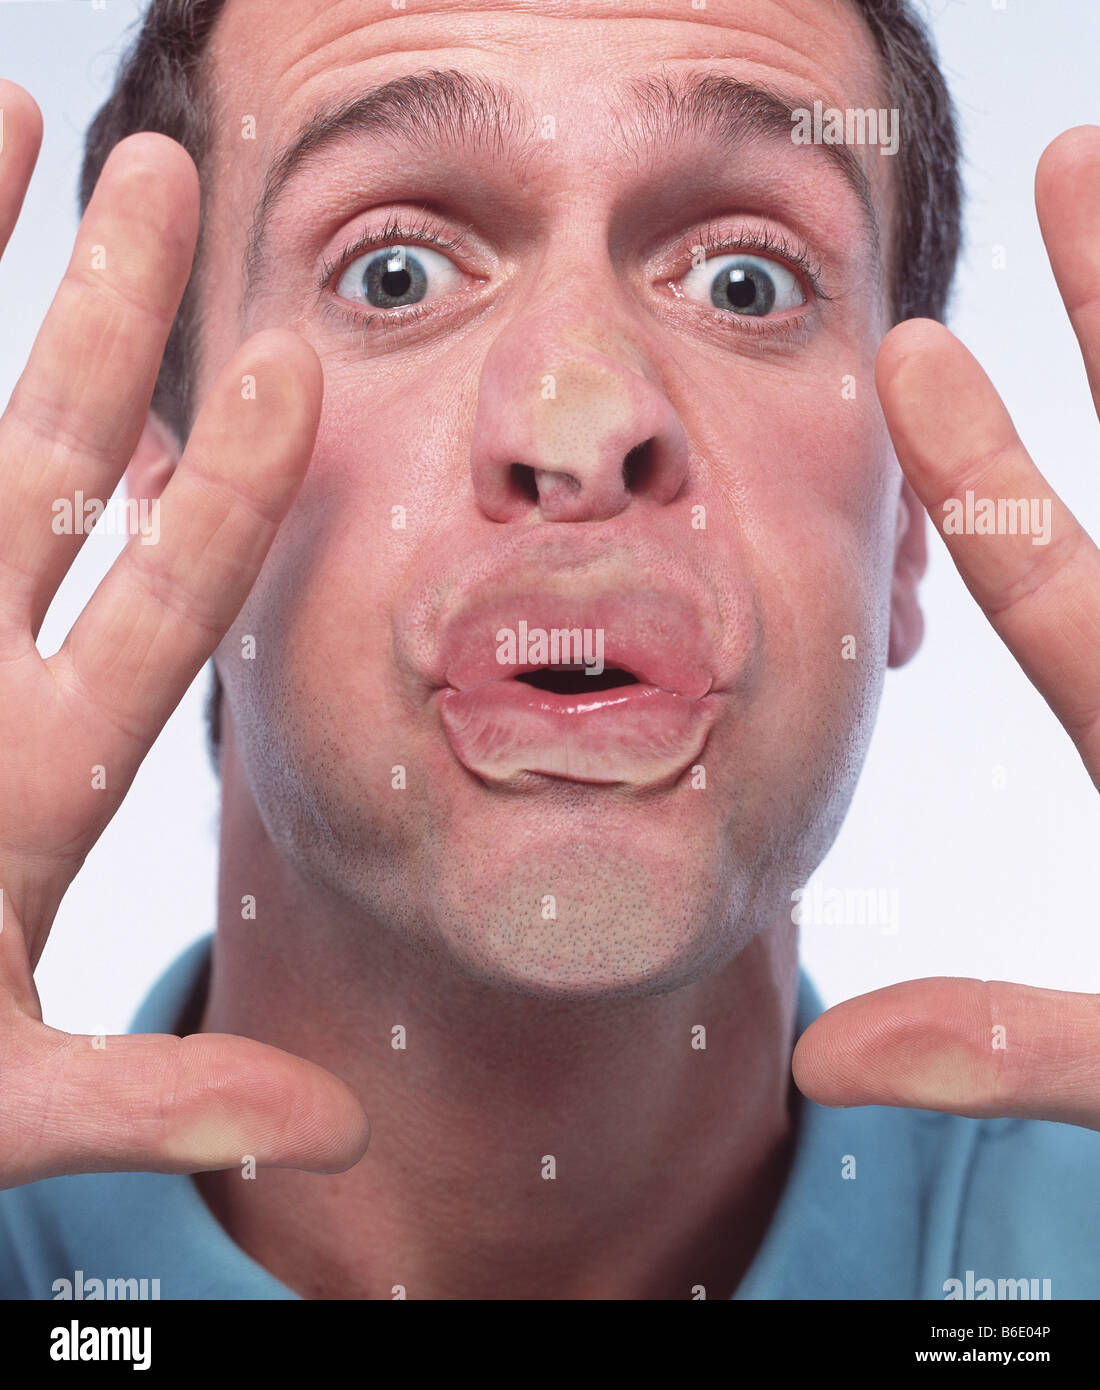 Man squashed face Stock Photo